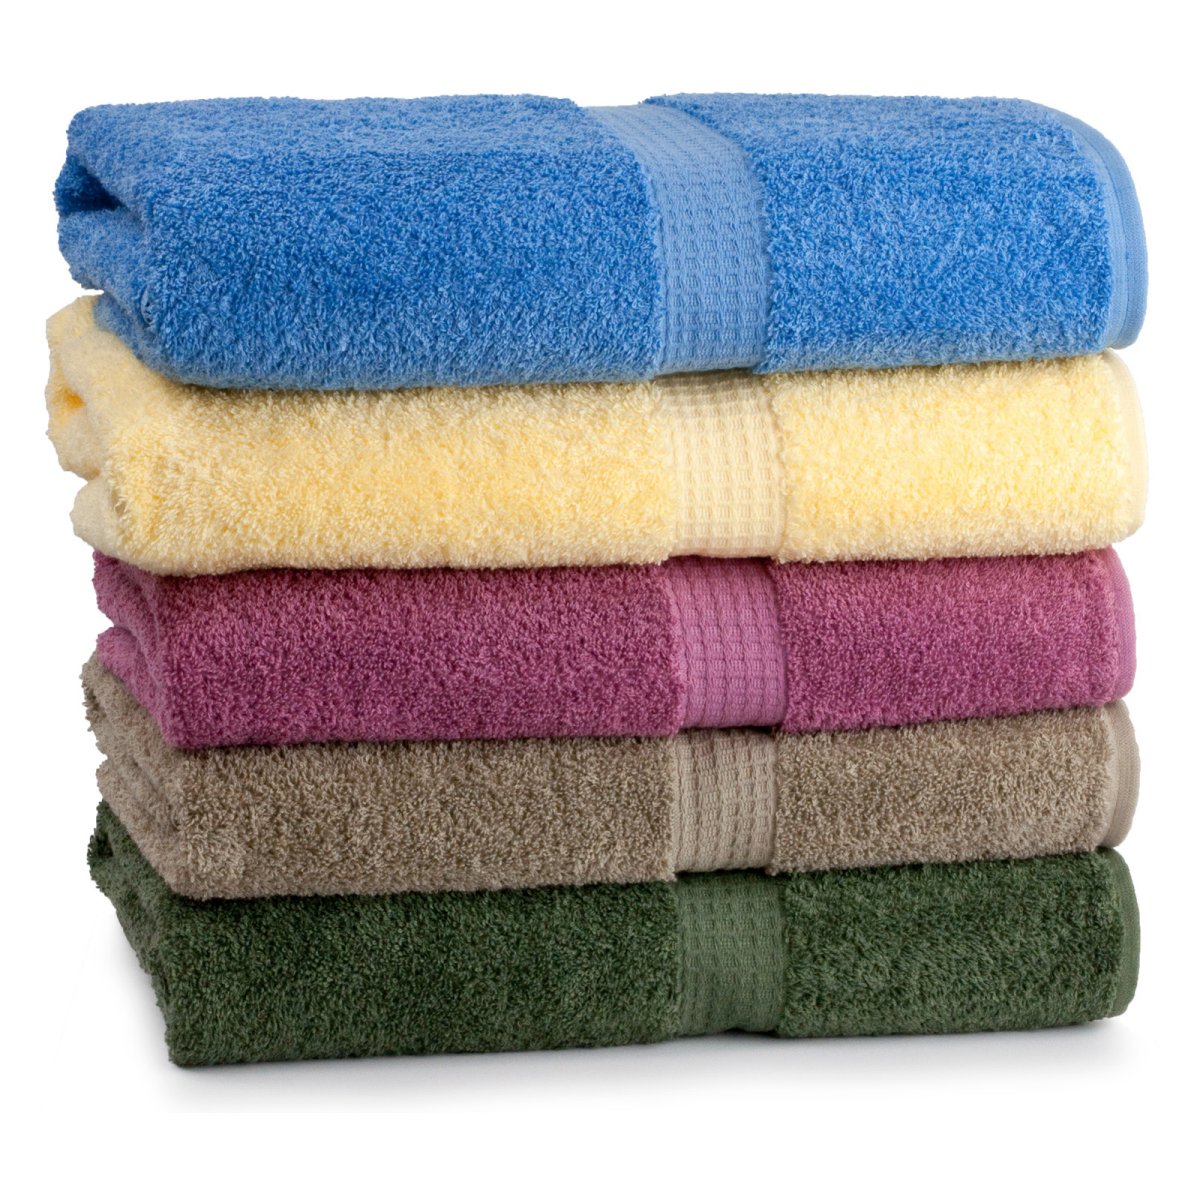 Bathroom Towels Image   Industry Standard Design